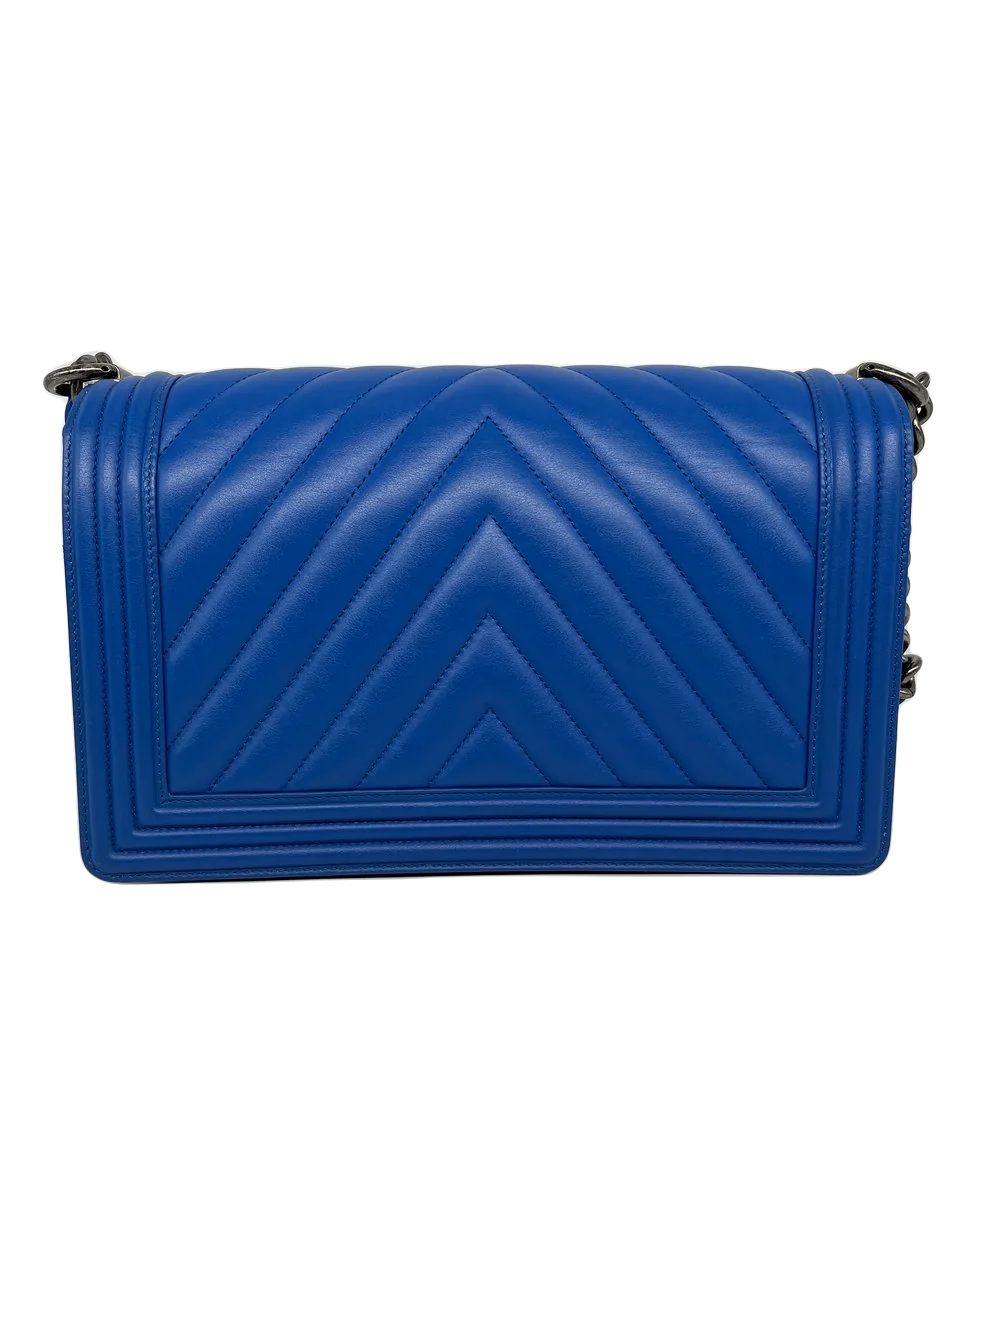 Chanel Boy Bag Large Blue RHW - SOLD